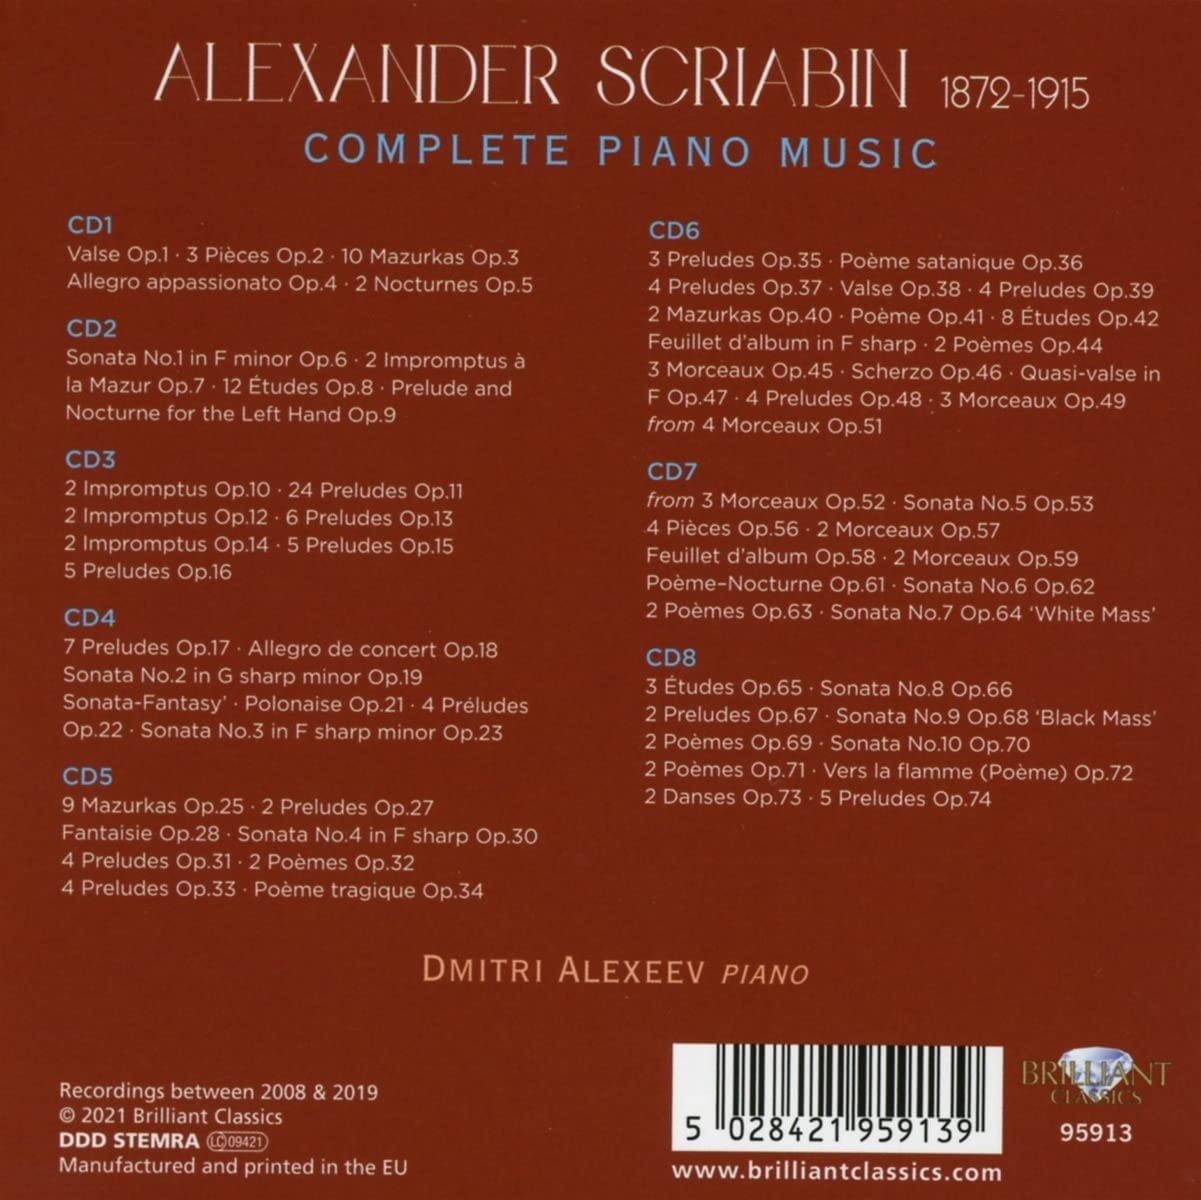 Dmitri Alexeev 스크리아빈: 피아노 독주곡 전곡 (Scriabin: Complete Piano Music) 